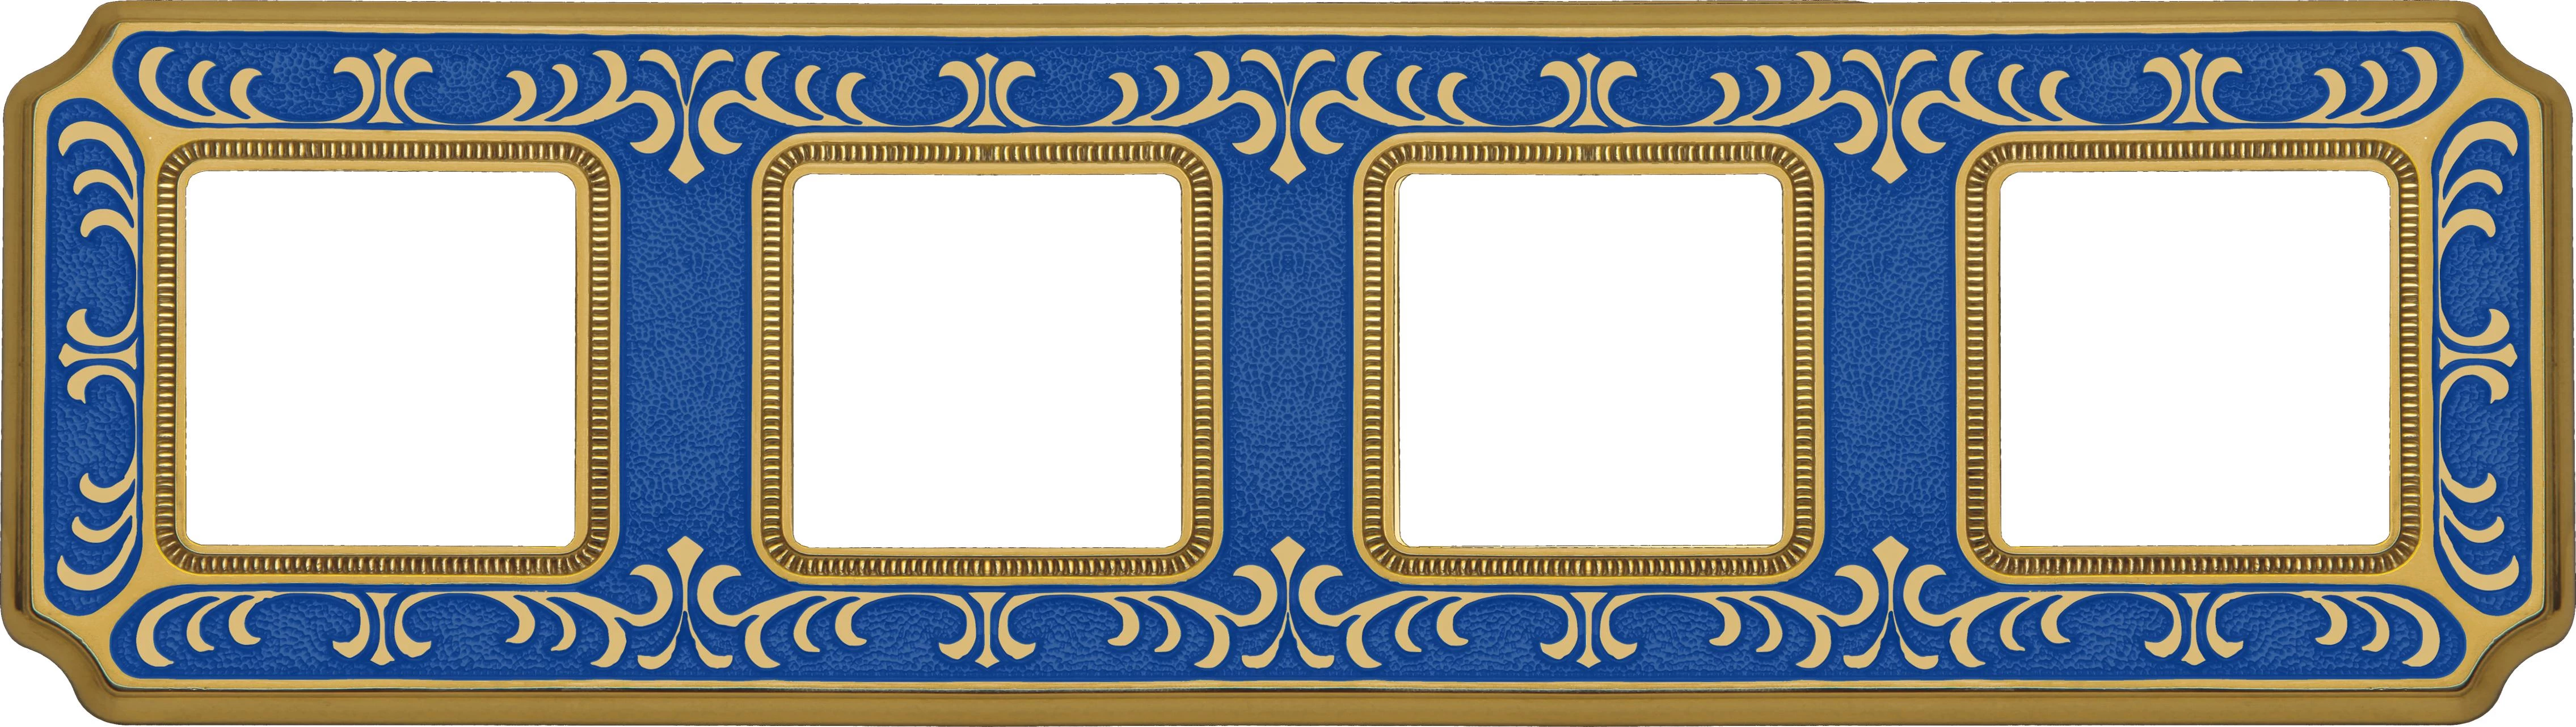  артикул FD01354AZEN название Рамка четверная, цвет Голубой сапфир, Siena, Fede